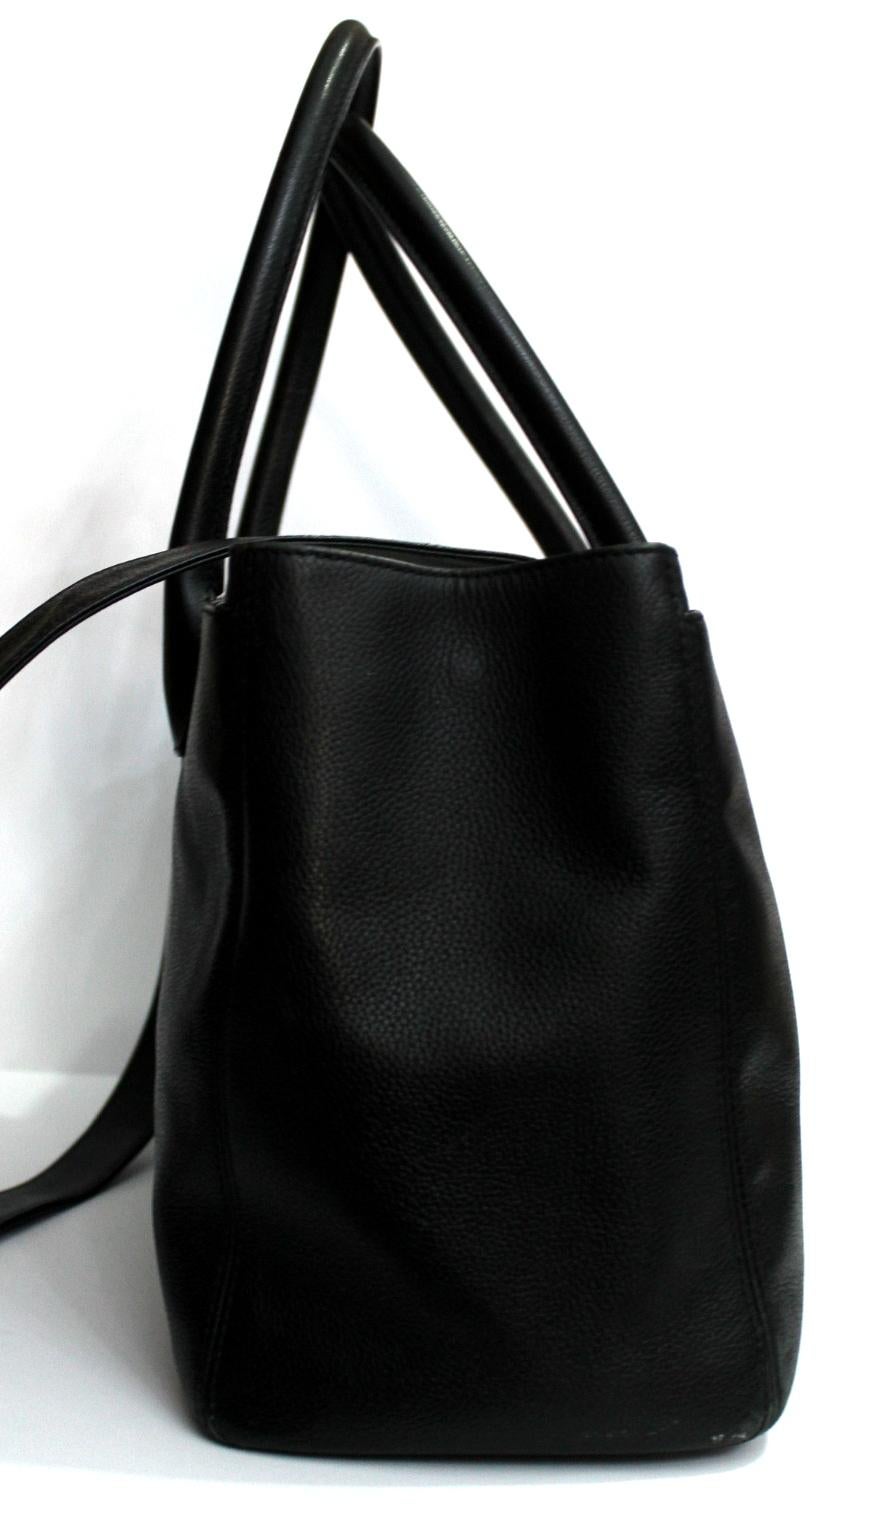 2013/2014 Chanel Black Leather Executive Bag 1